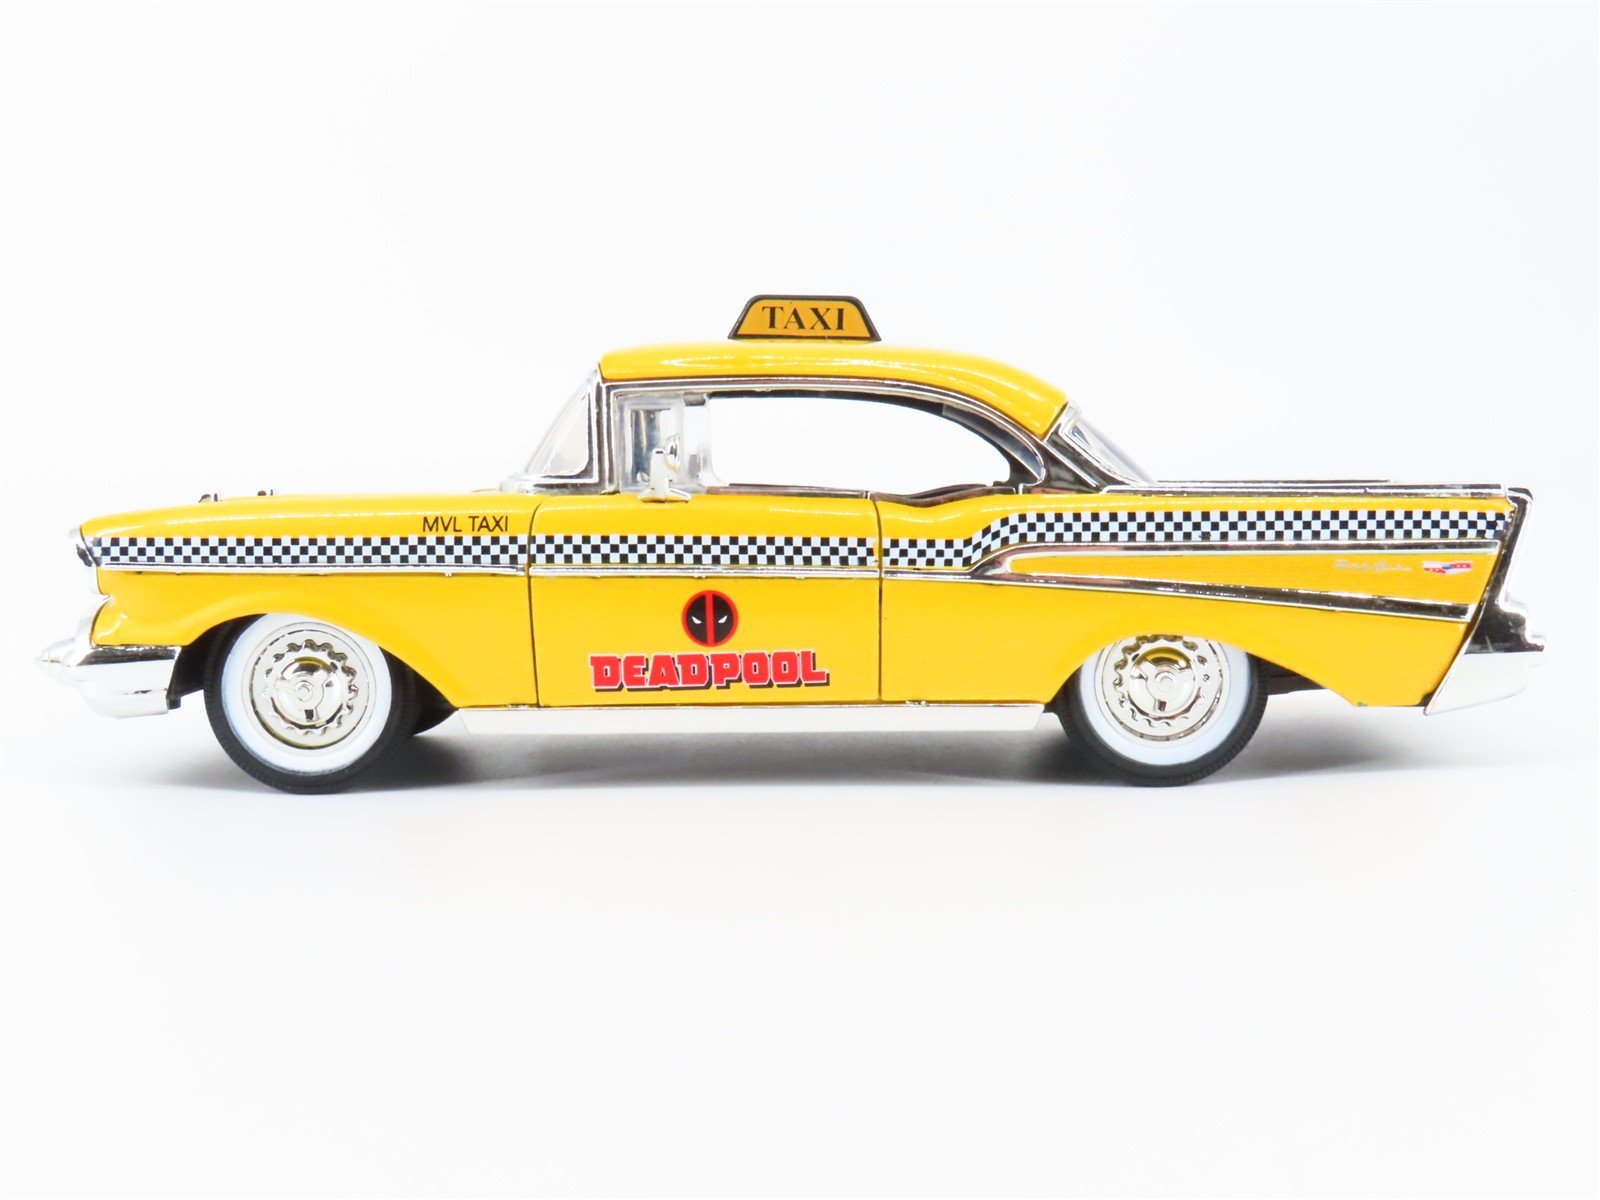 1:24 Scale Jada Toys #30288 Die-Cast 1957 Chevy Bel Air Taxi "Deadpool"